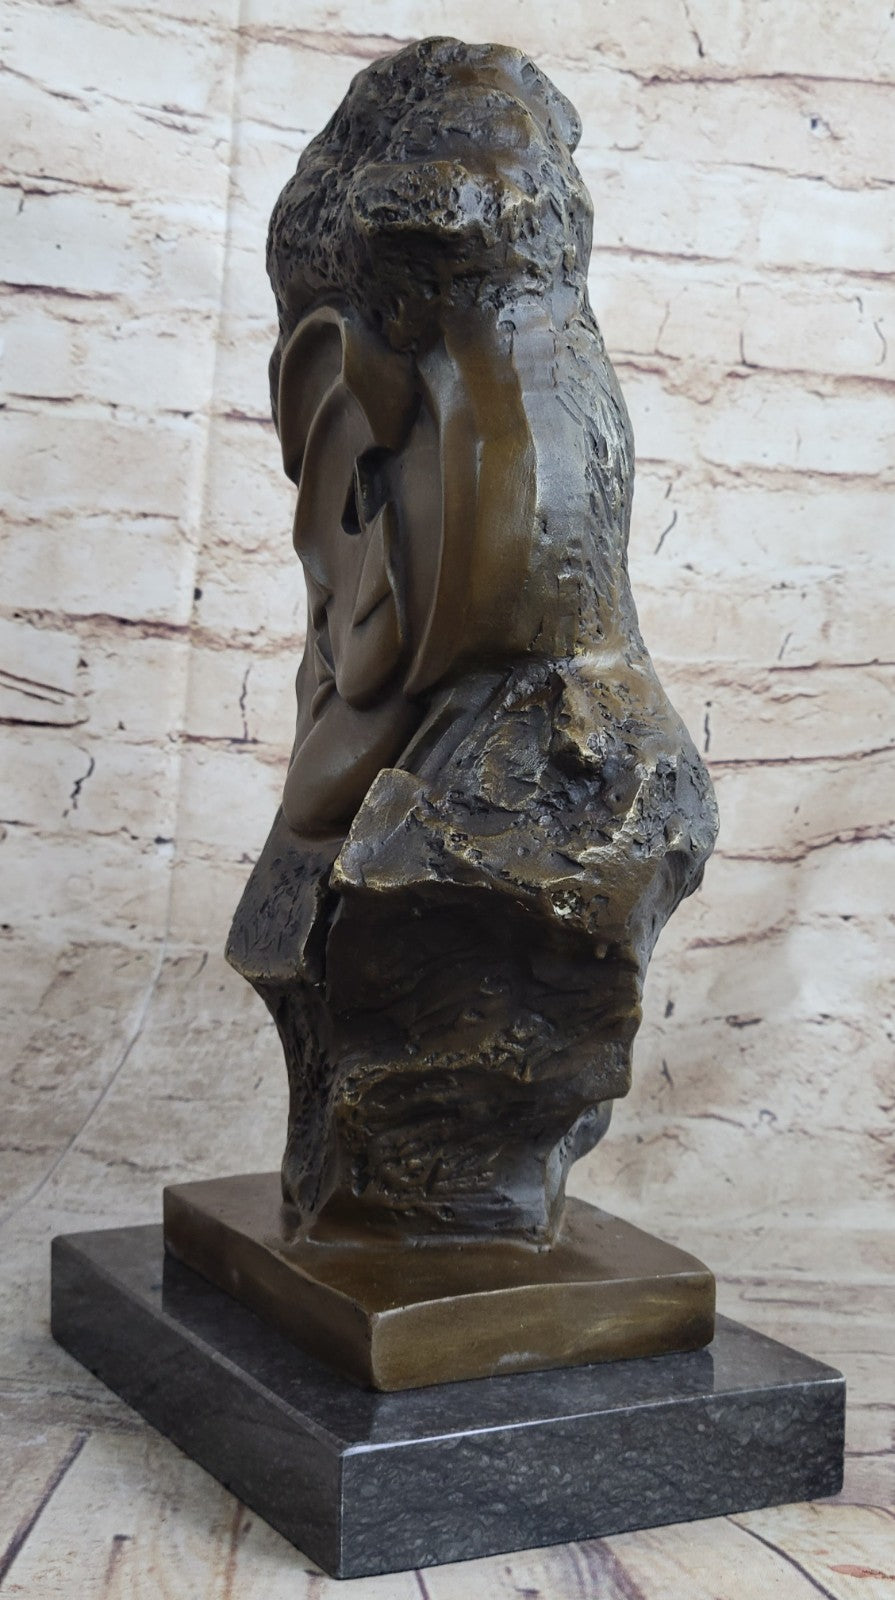 Handcrafted bronze sculpture SALE Art Modern Abstract Signed Salvador Dali